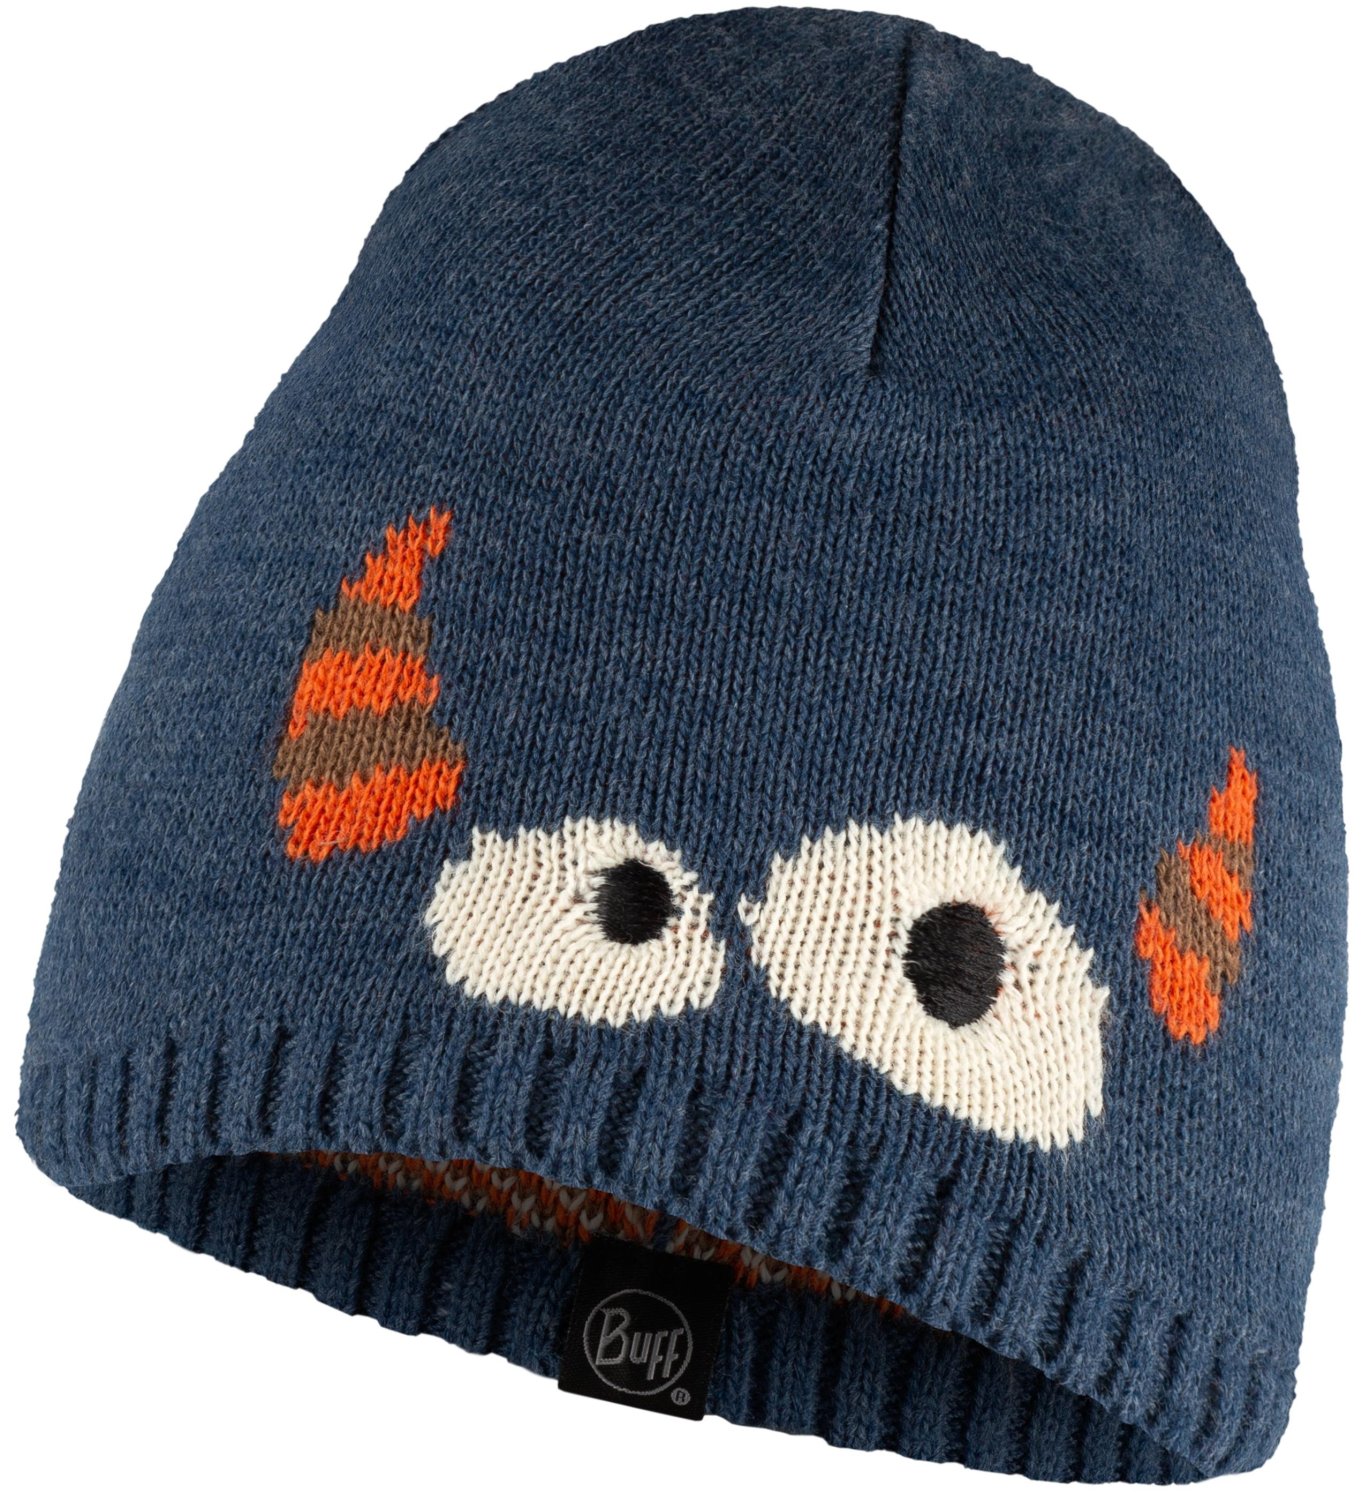 Шапка Buff Knitted Hat Bonky Eyes Denim US:one size, 129626.788.10.00, цвет синяя